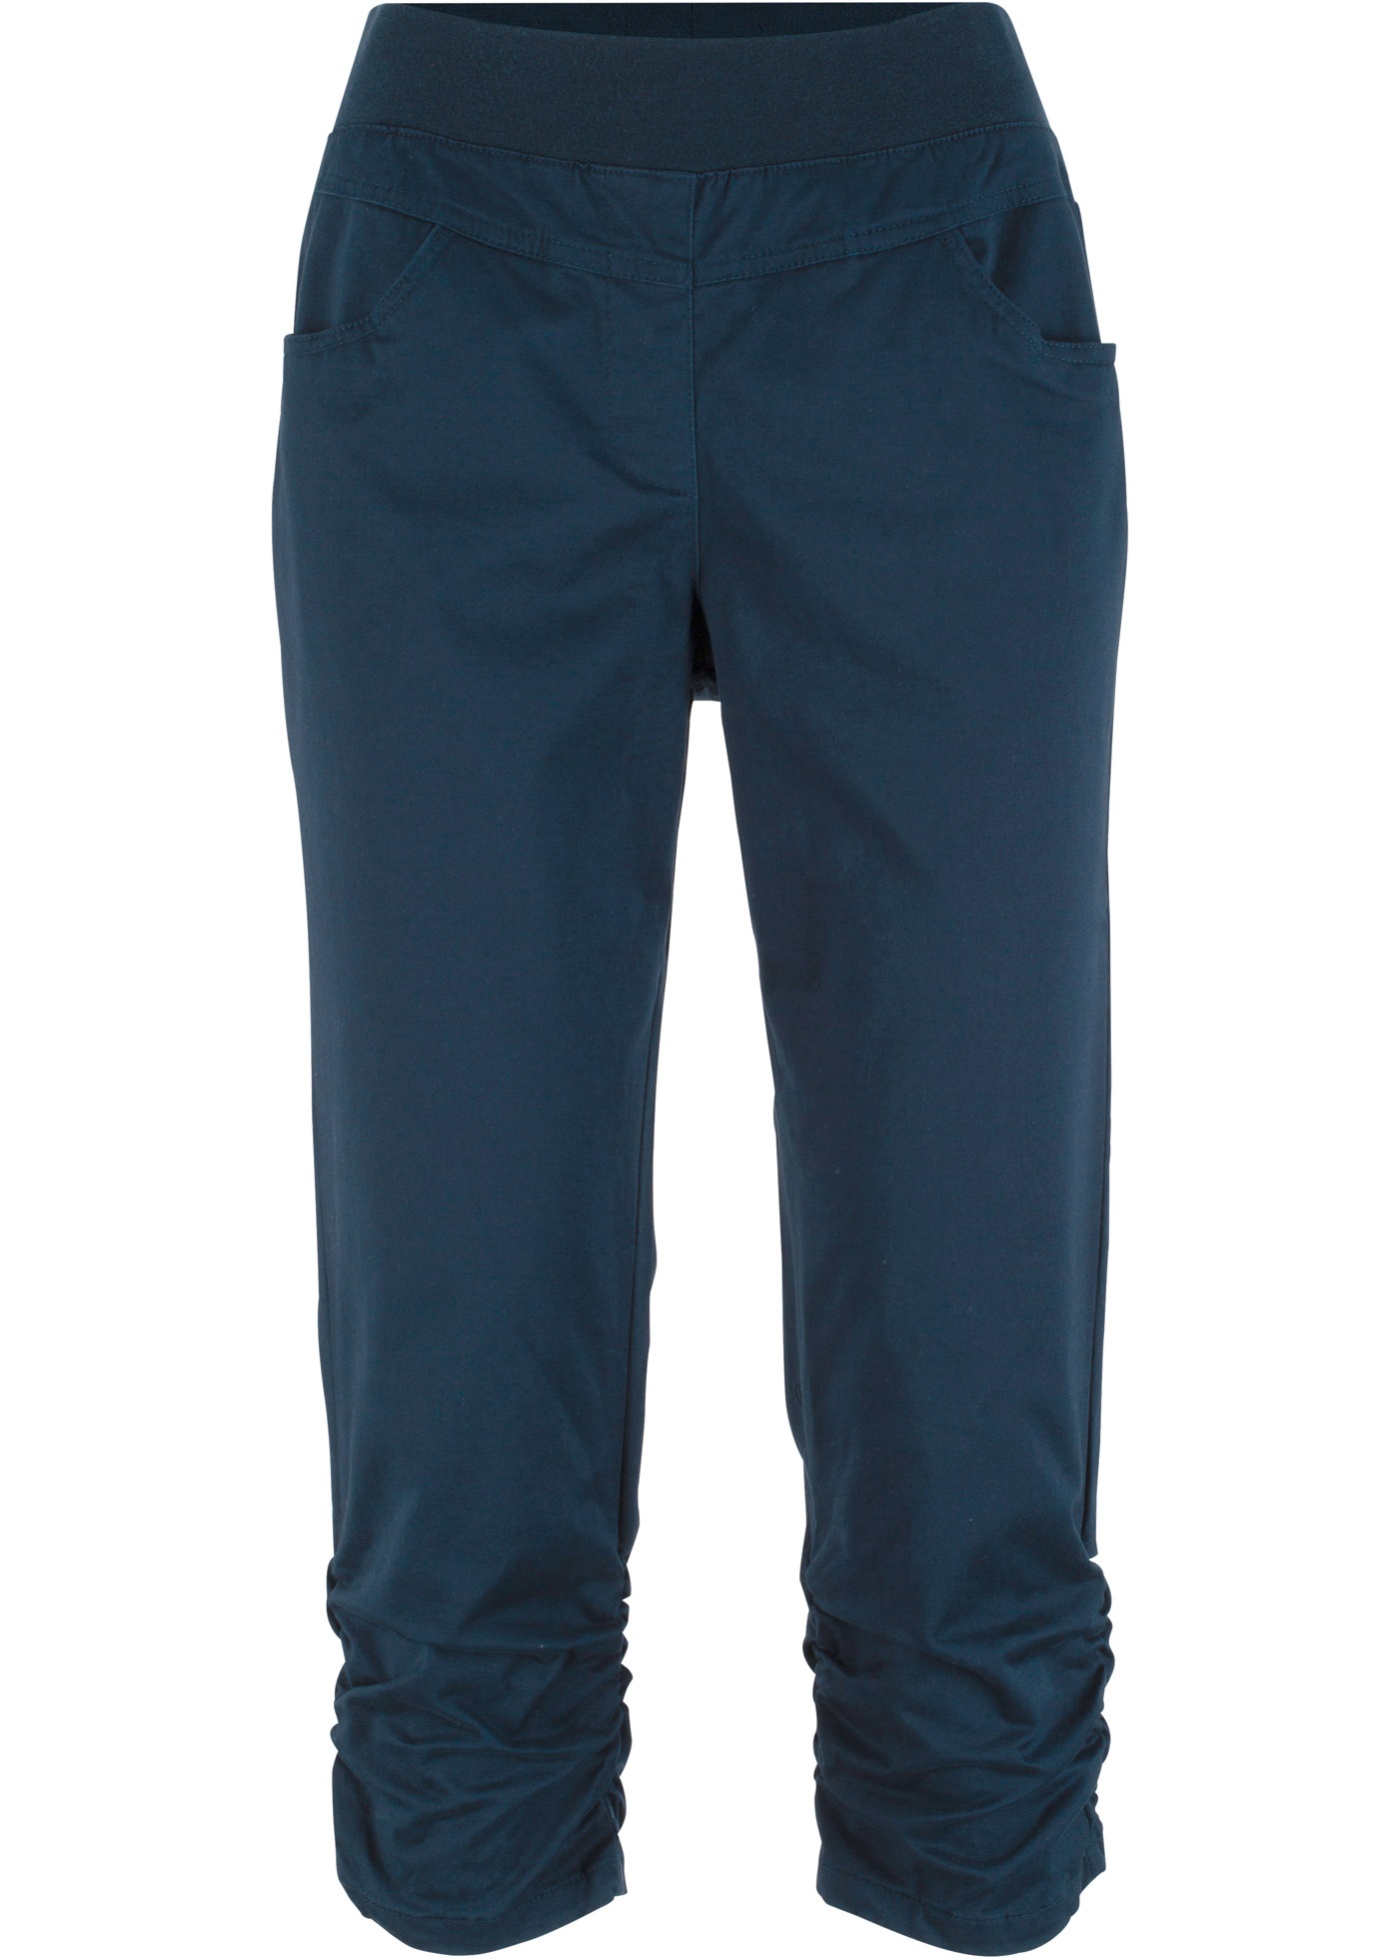 Pantaloni capri con arricciature (Blu) - bpc bonprix collection